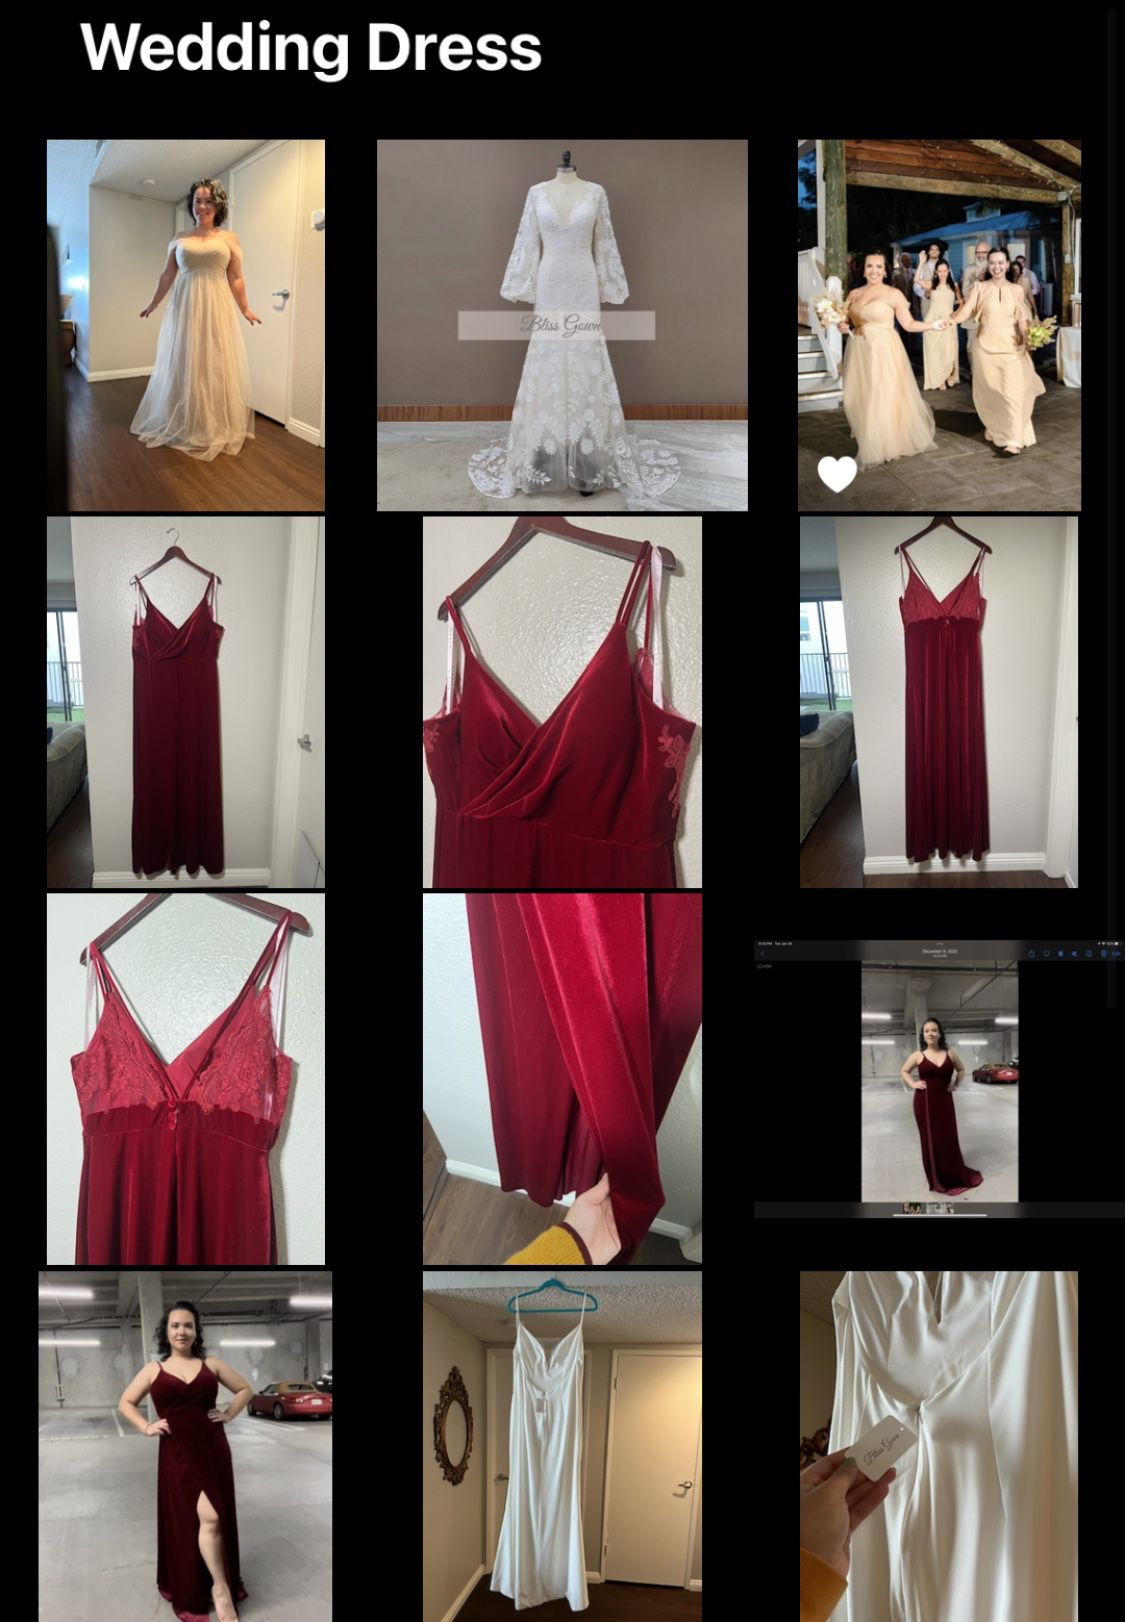 3 Gowns: Bridesmaid/Black Tie/Halloween